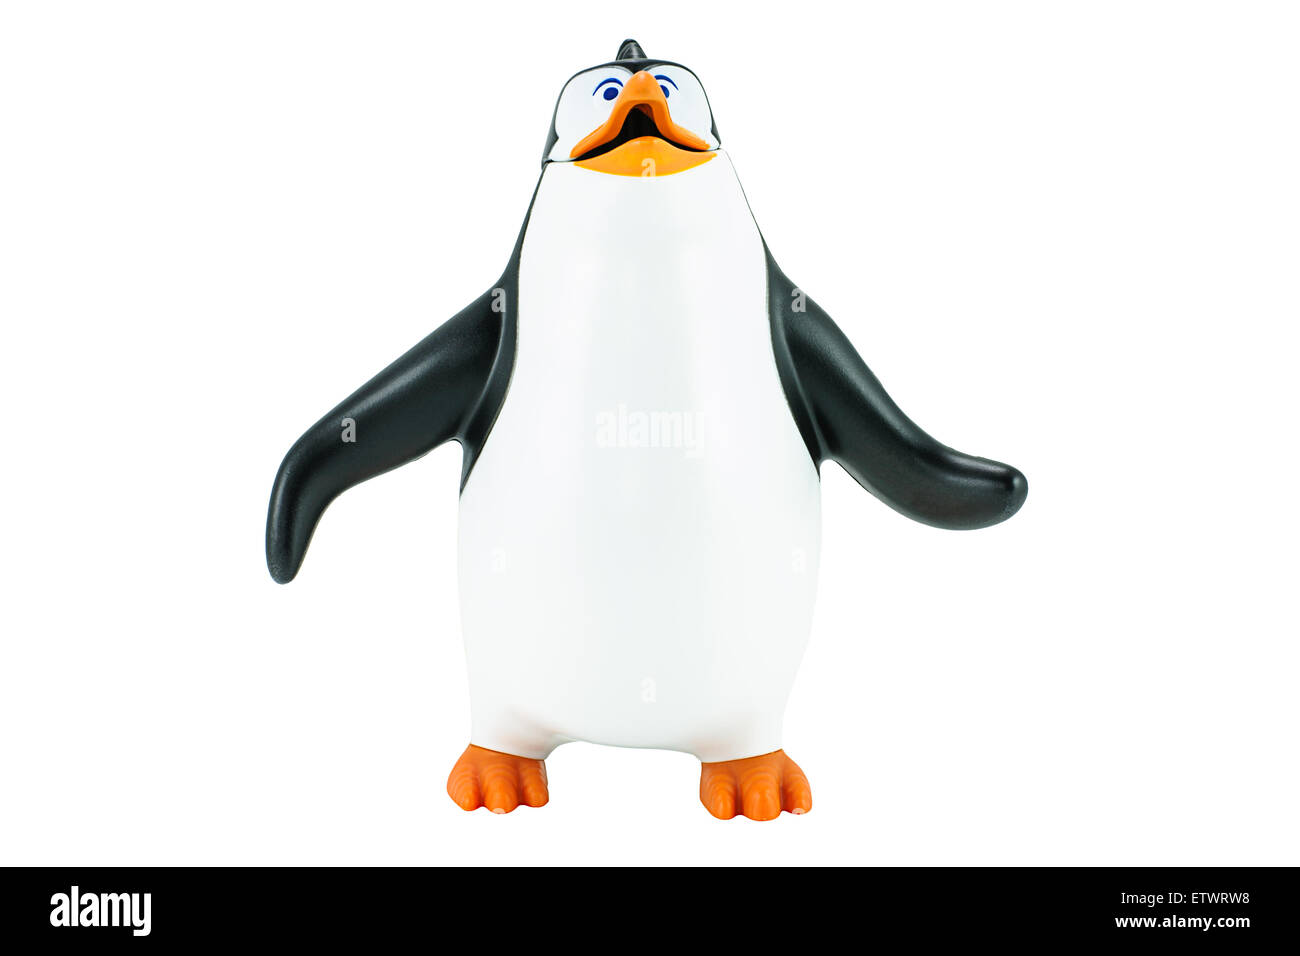 Bangkok, Thailand - 24. Februar 2015: Rico Pinguin Spielzeug Charakter Form Pinguine aus Madagascar Animationsfilm. Stockfoto